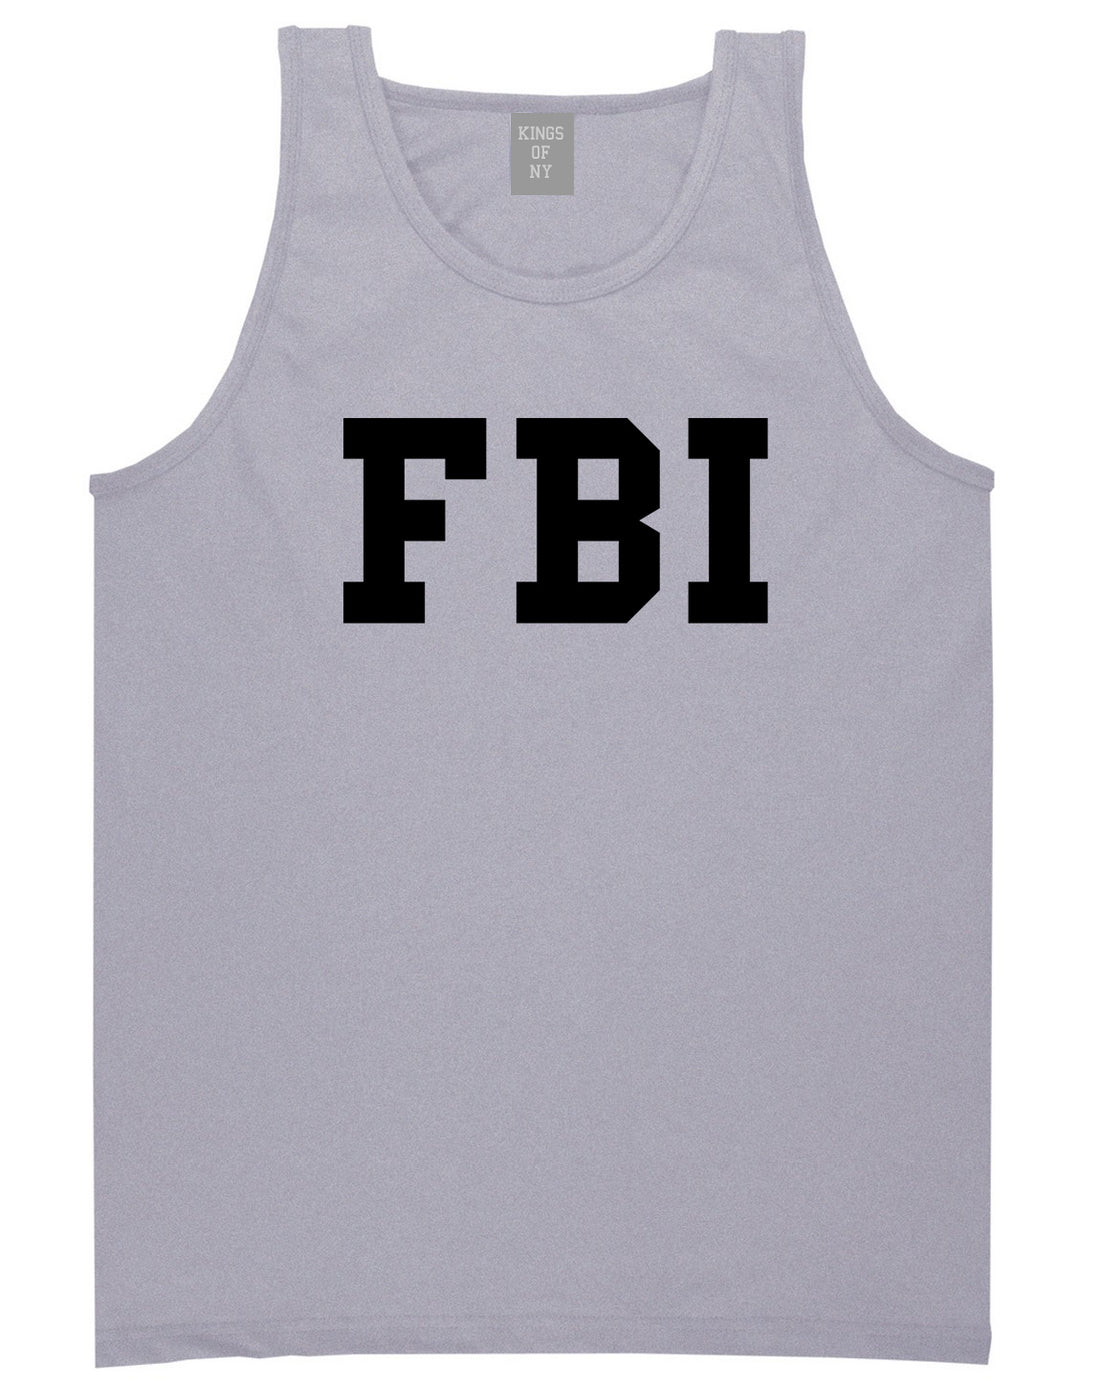 FBI Law Enforcement Mens Grey Tank Top Shirt by KINGS OF NY